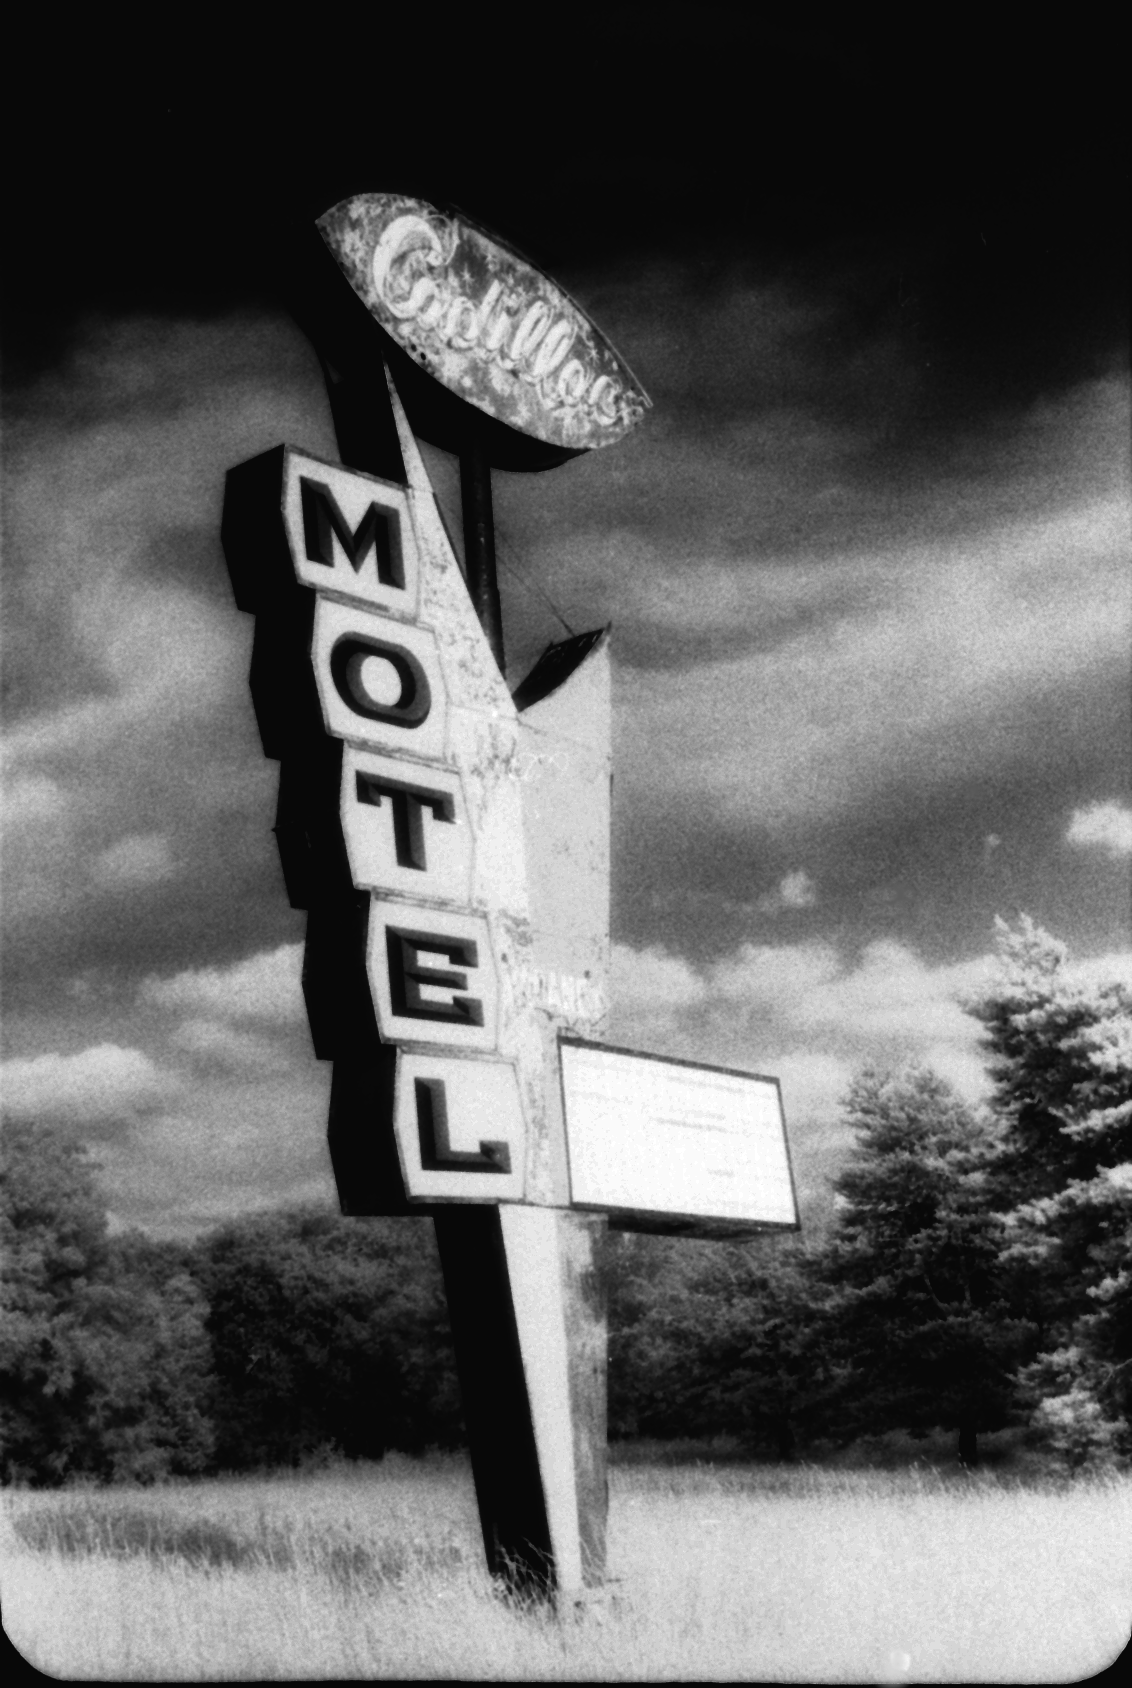 photography sample 2 - Cadillac Motel sign